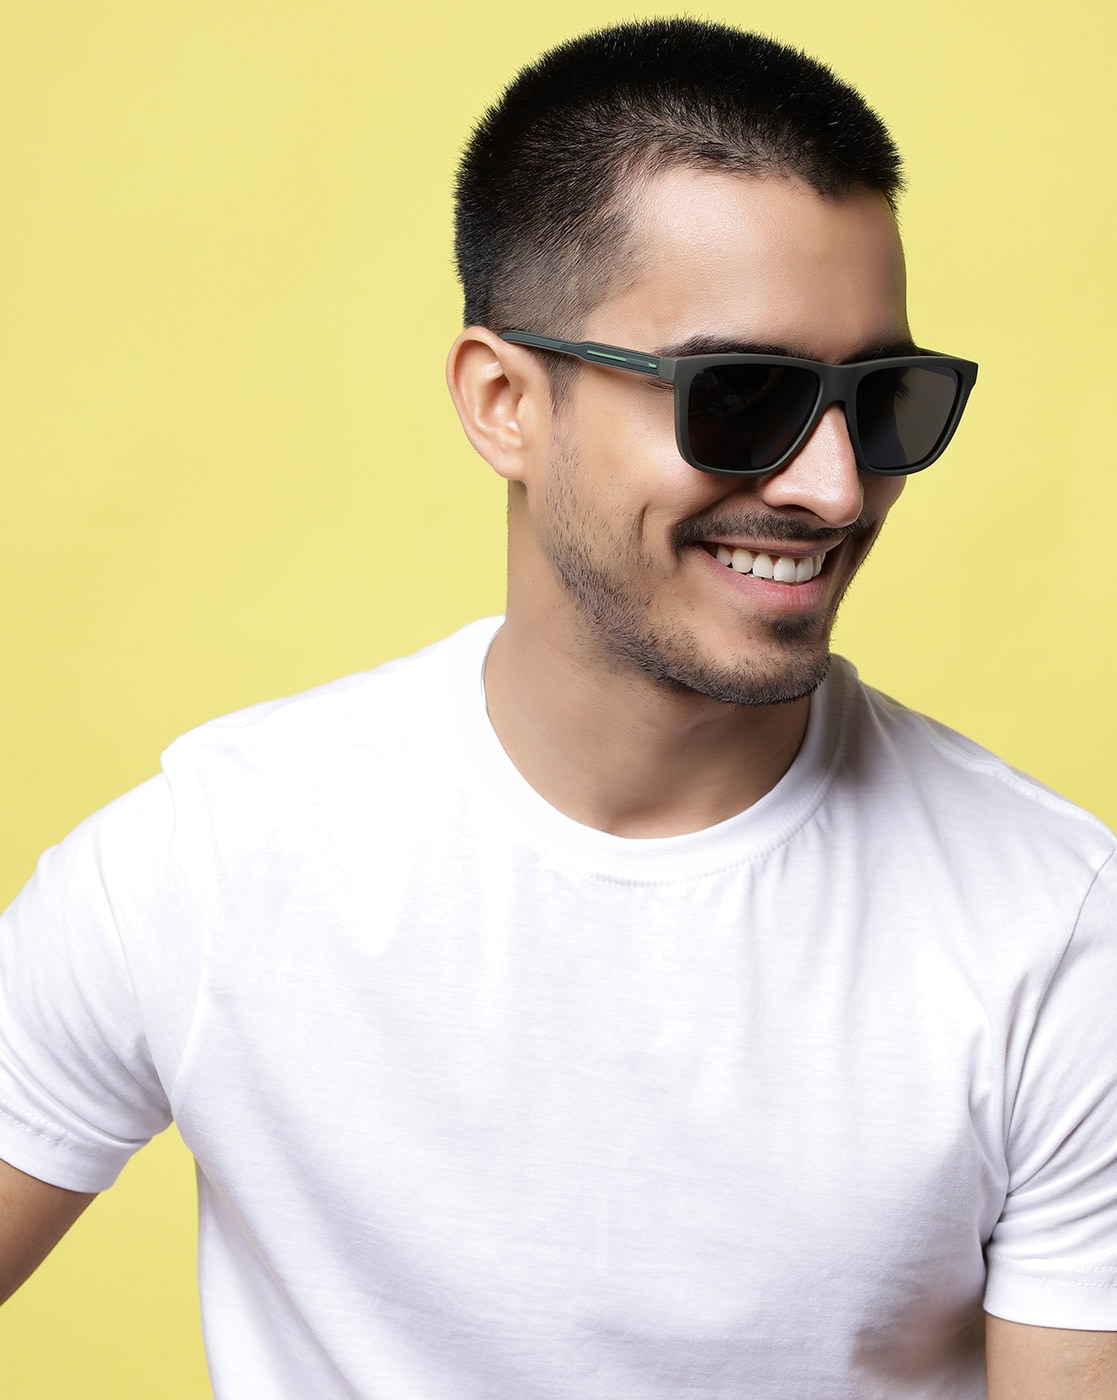 Buy Green Sunglasses for Men by Havaianas Online | Ajio.com